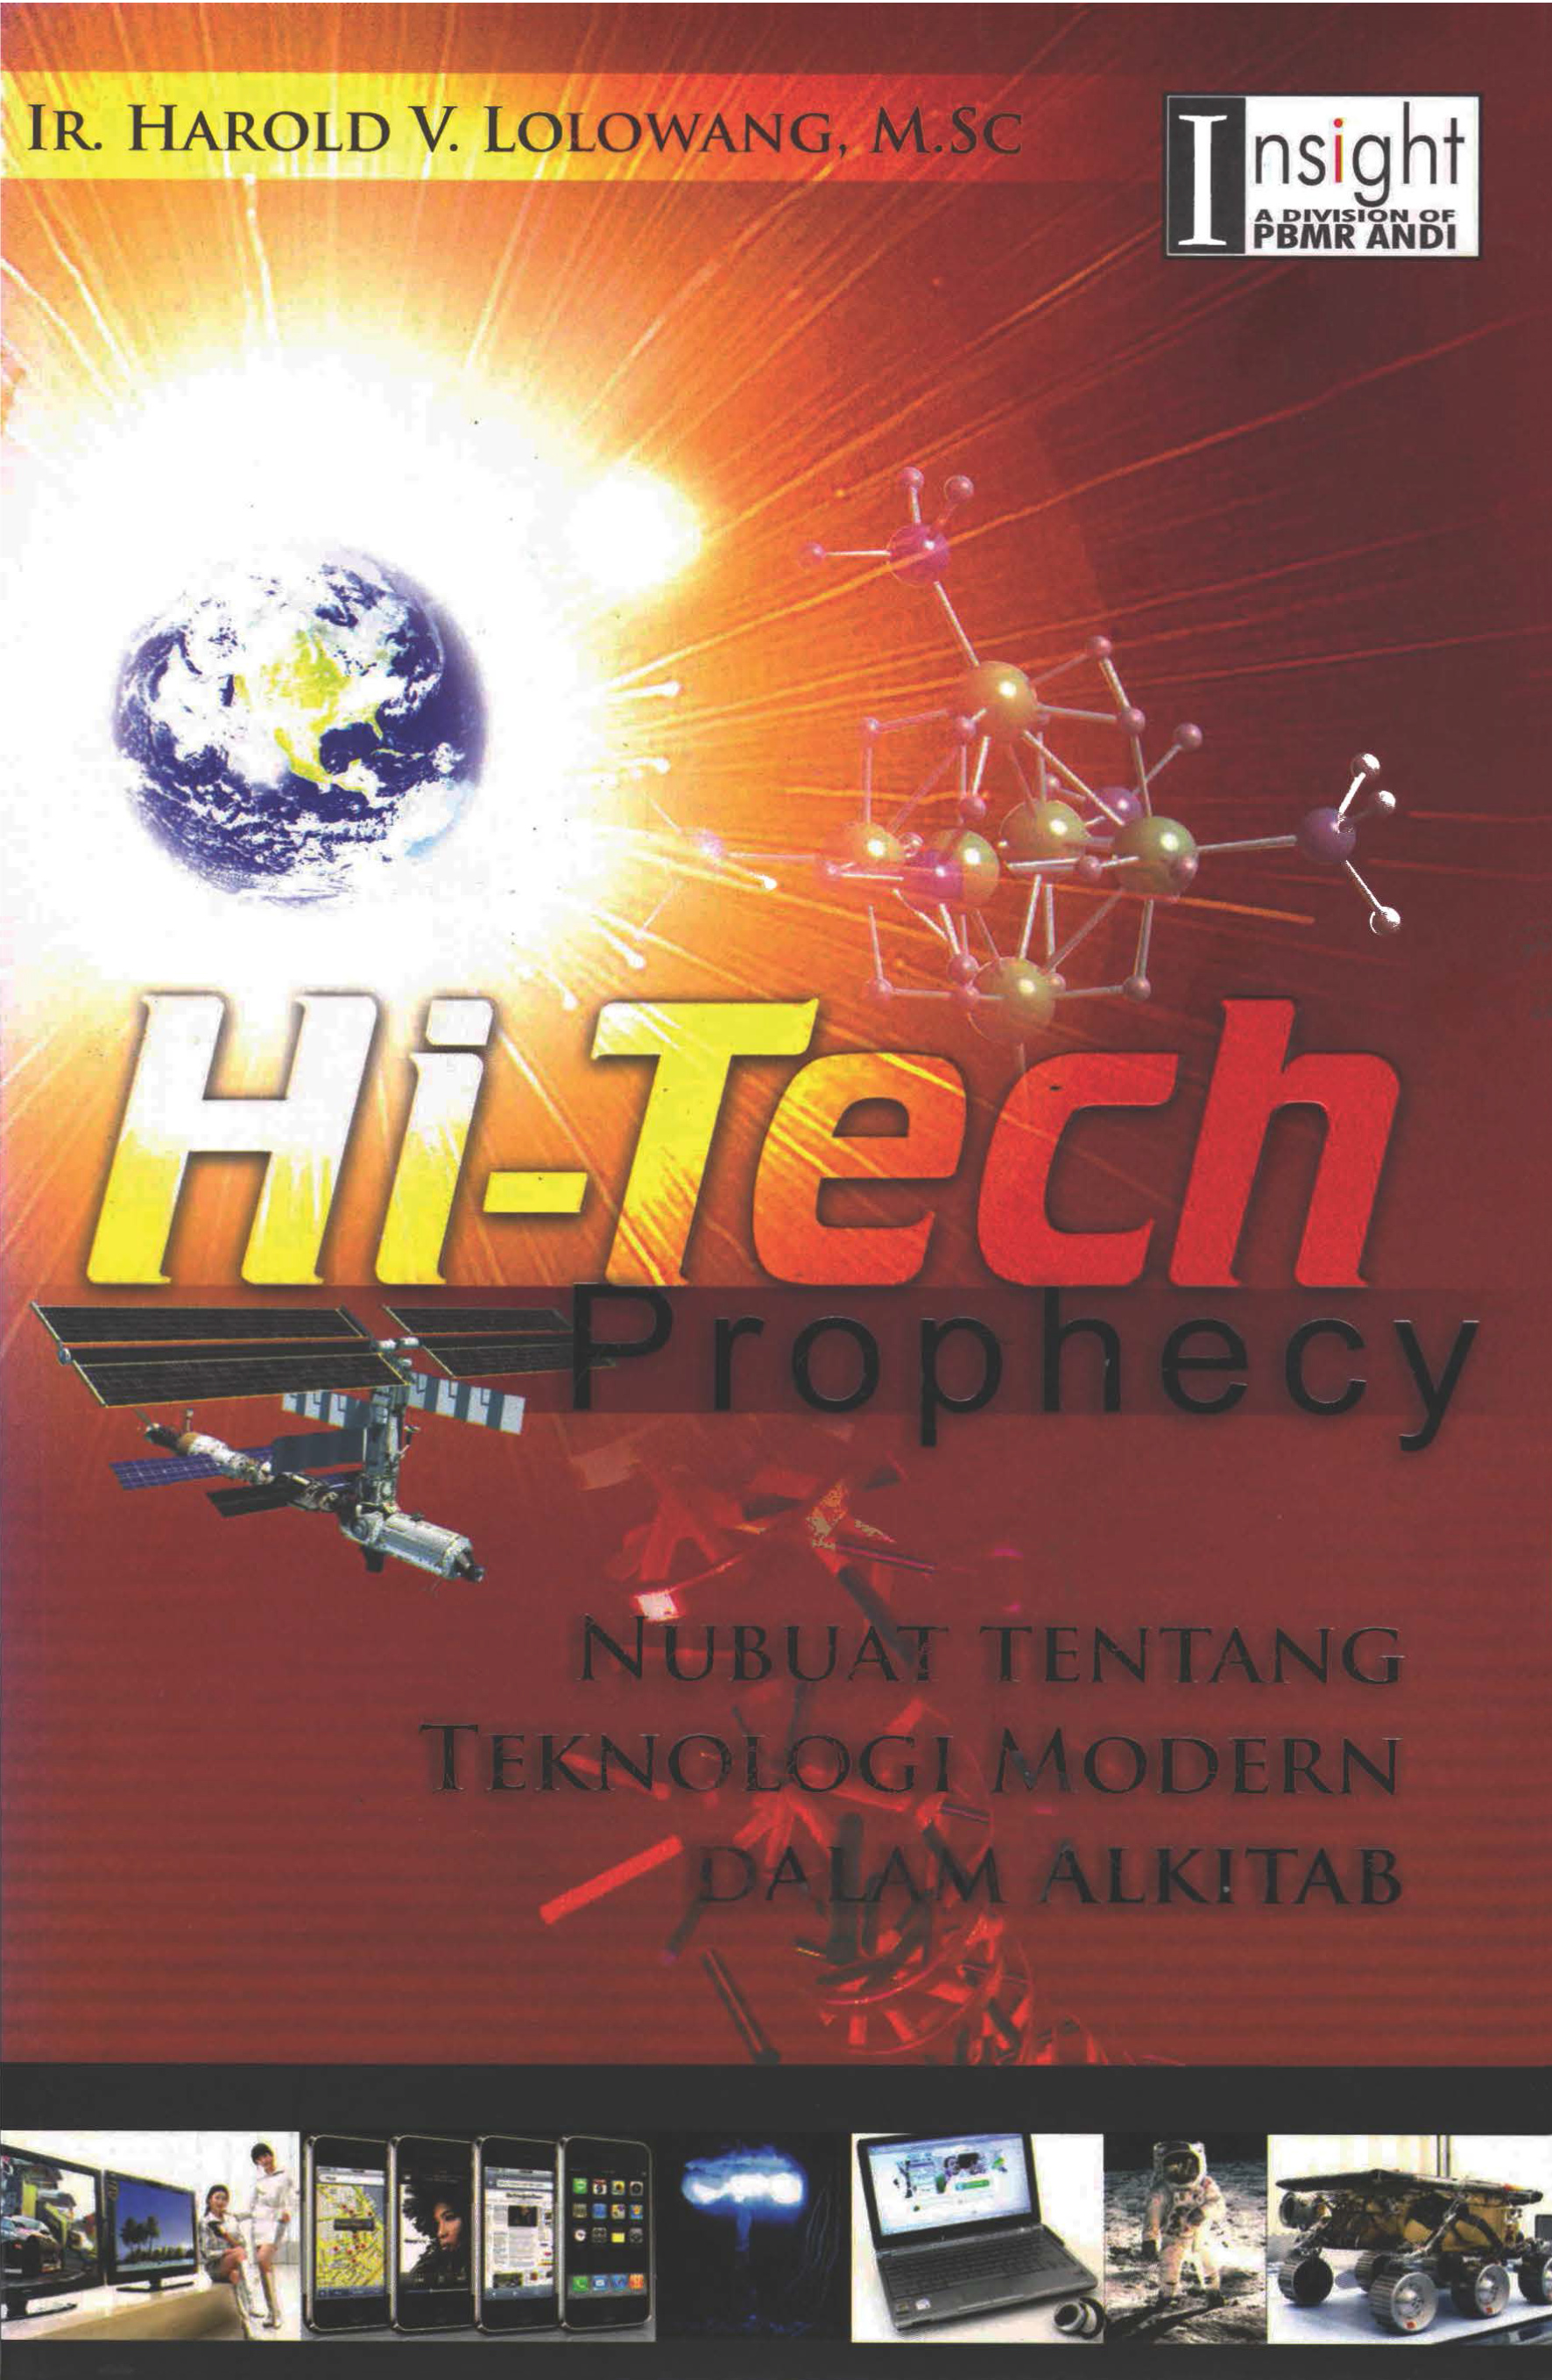 Hi-tech prophecy : nubuat tentang teknologi modern dalam Alkitab [sumber elektronis]